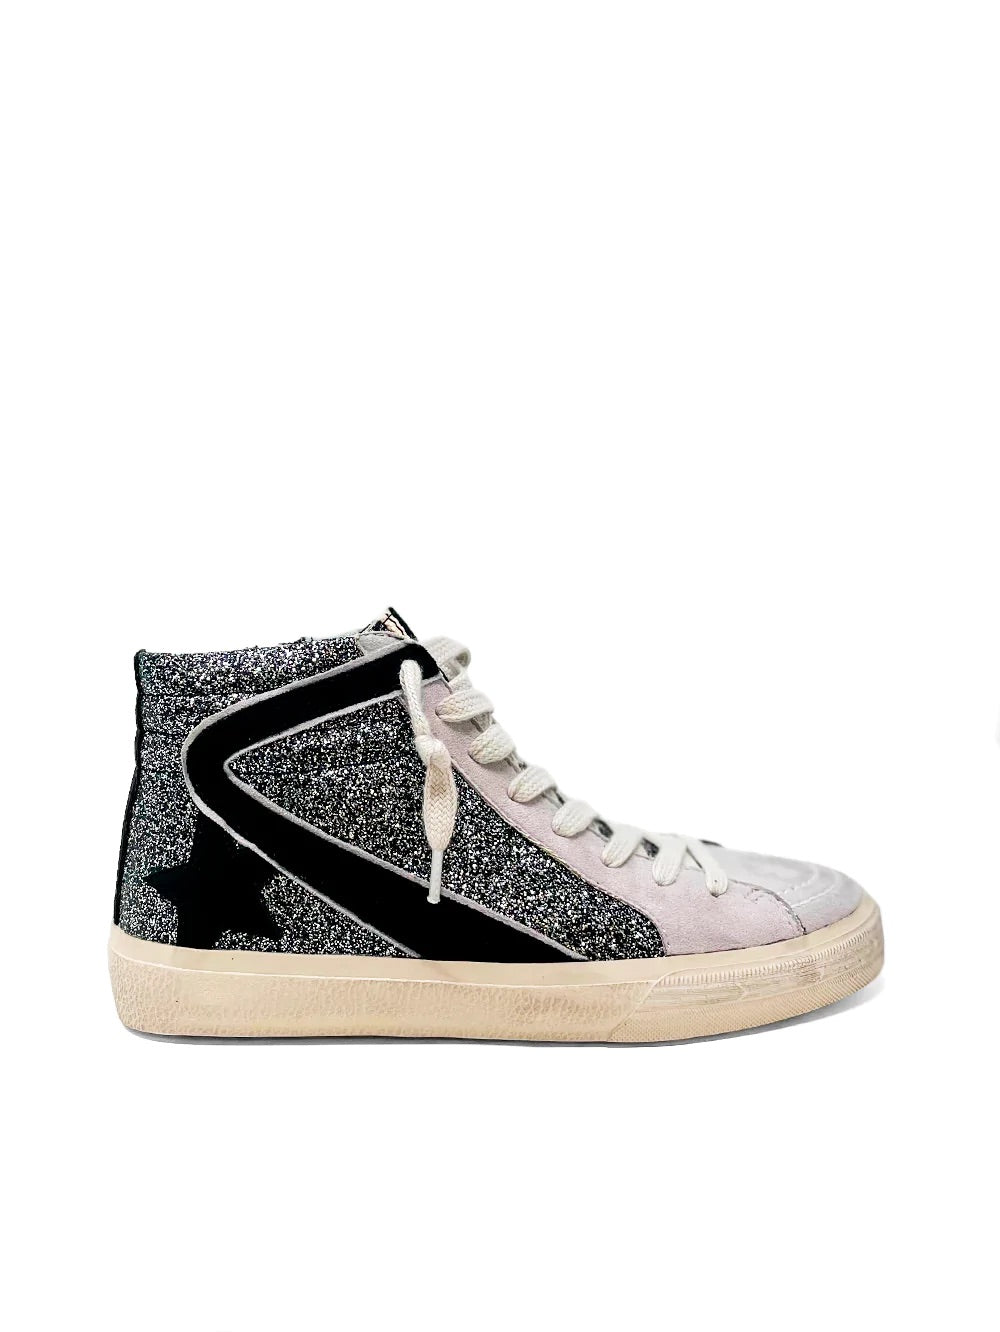 Roxanne Black Silver High Top Sneaker-Size 7 & 7.5 left